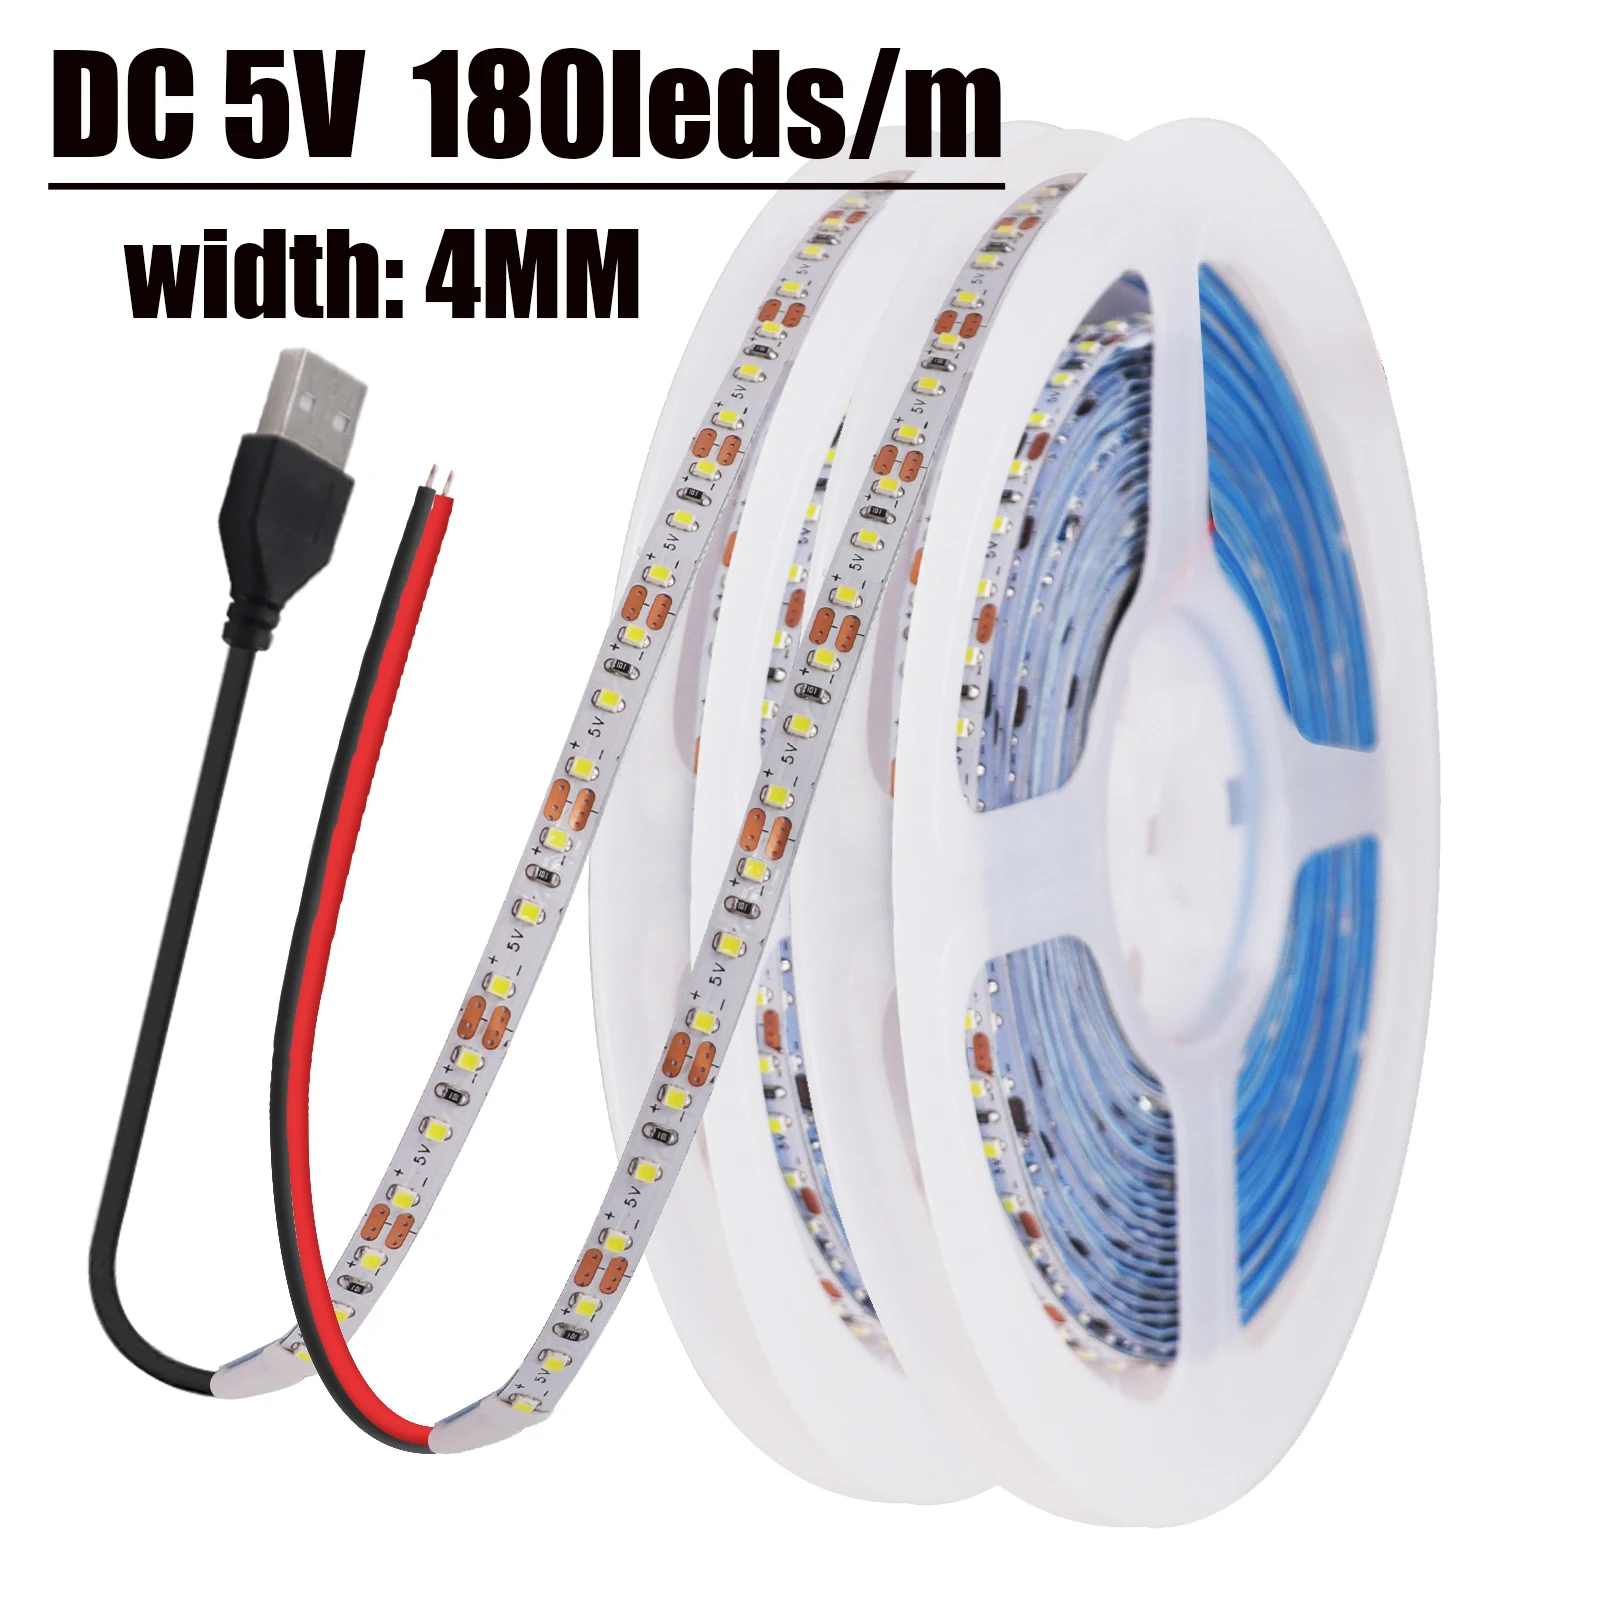 

DC 5V USB LED Strip SMD 1616 180Leds/M White/Warm White Width 4MM Home Decoration Flexible Ribbon Tape Rope Lights 1M-5M